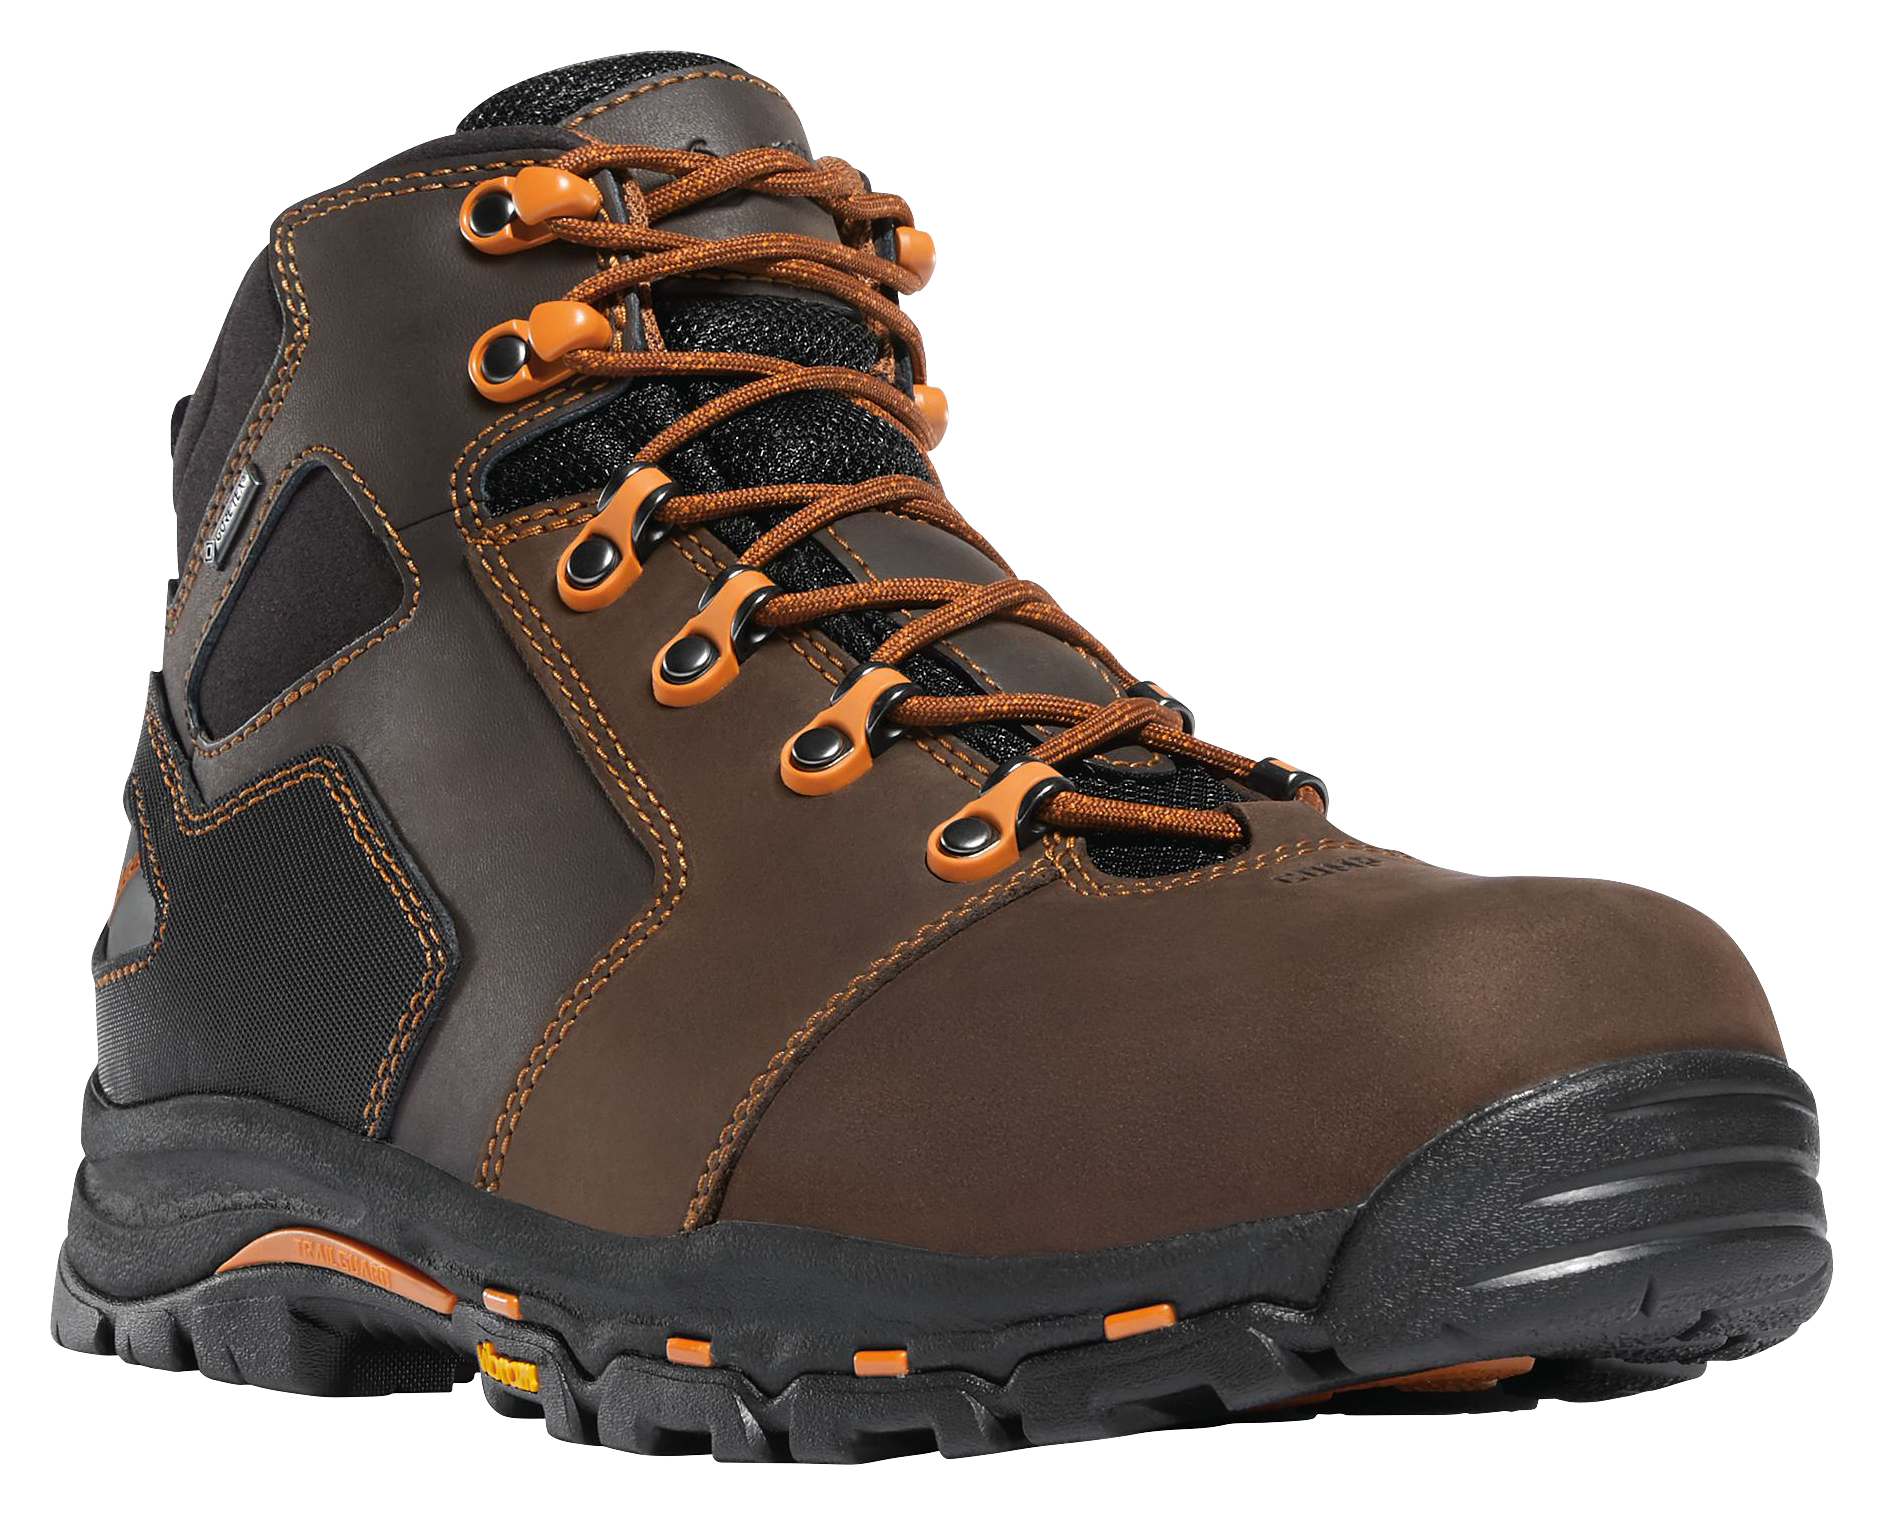 Danner Vicious 4.5'' GORE-TEX EH Work Boots for Men - Brown/Orange - 10.5M